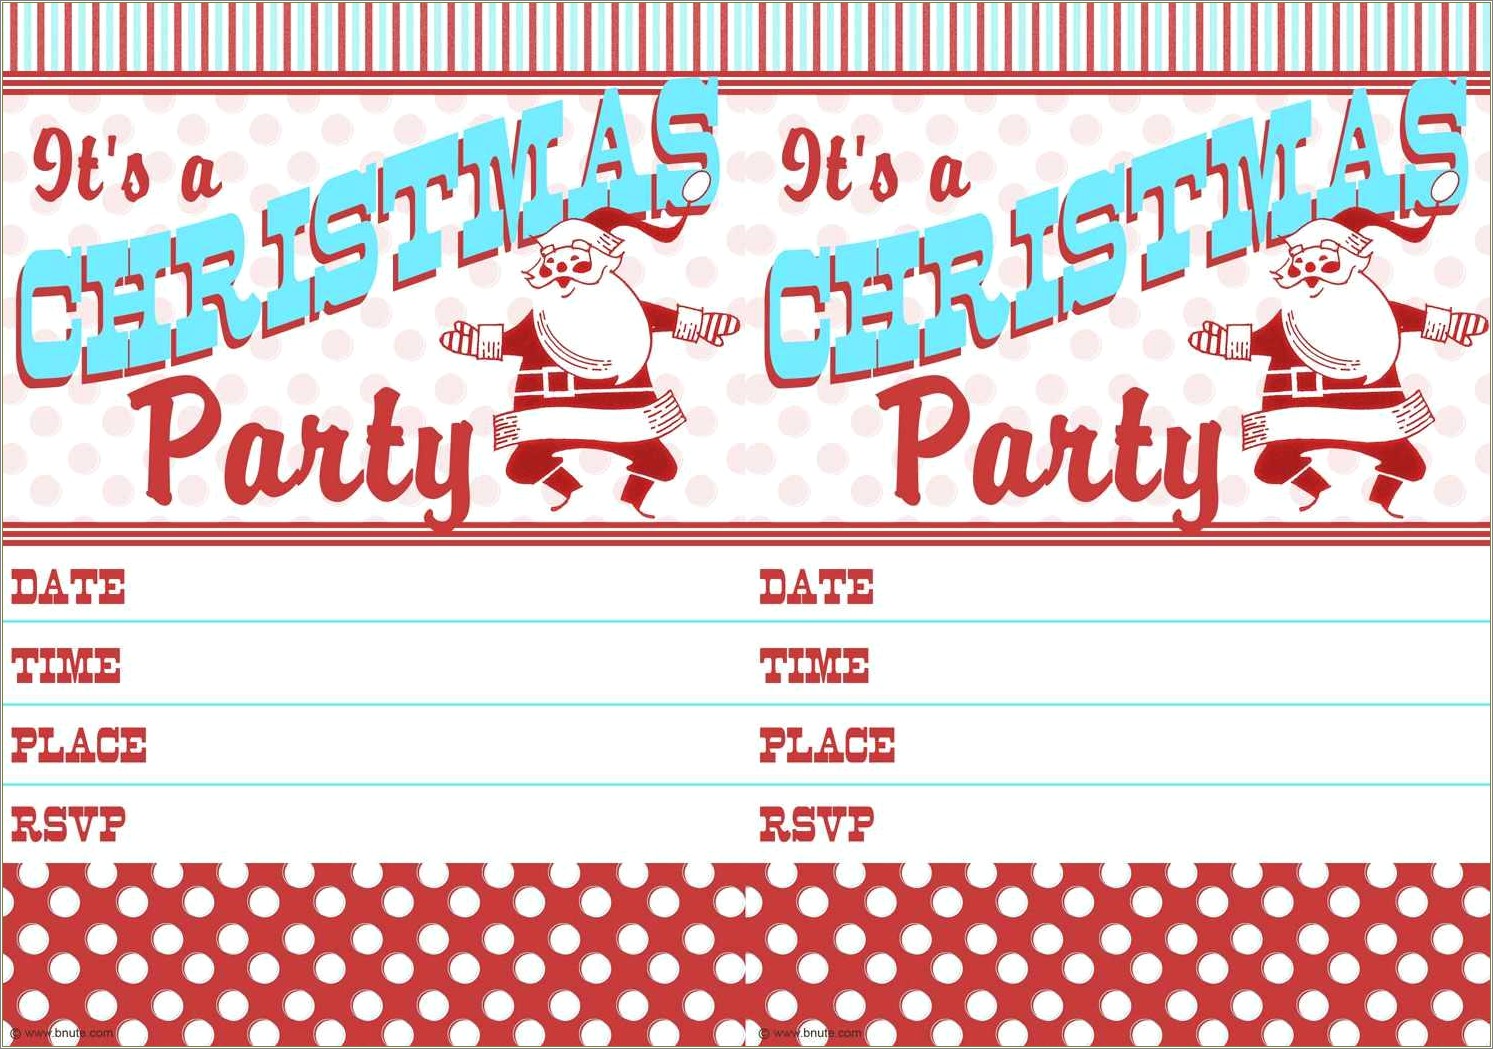 Christmas Party Invitation Templates Free Uk